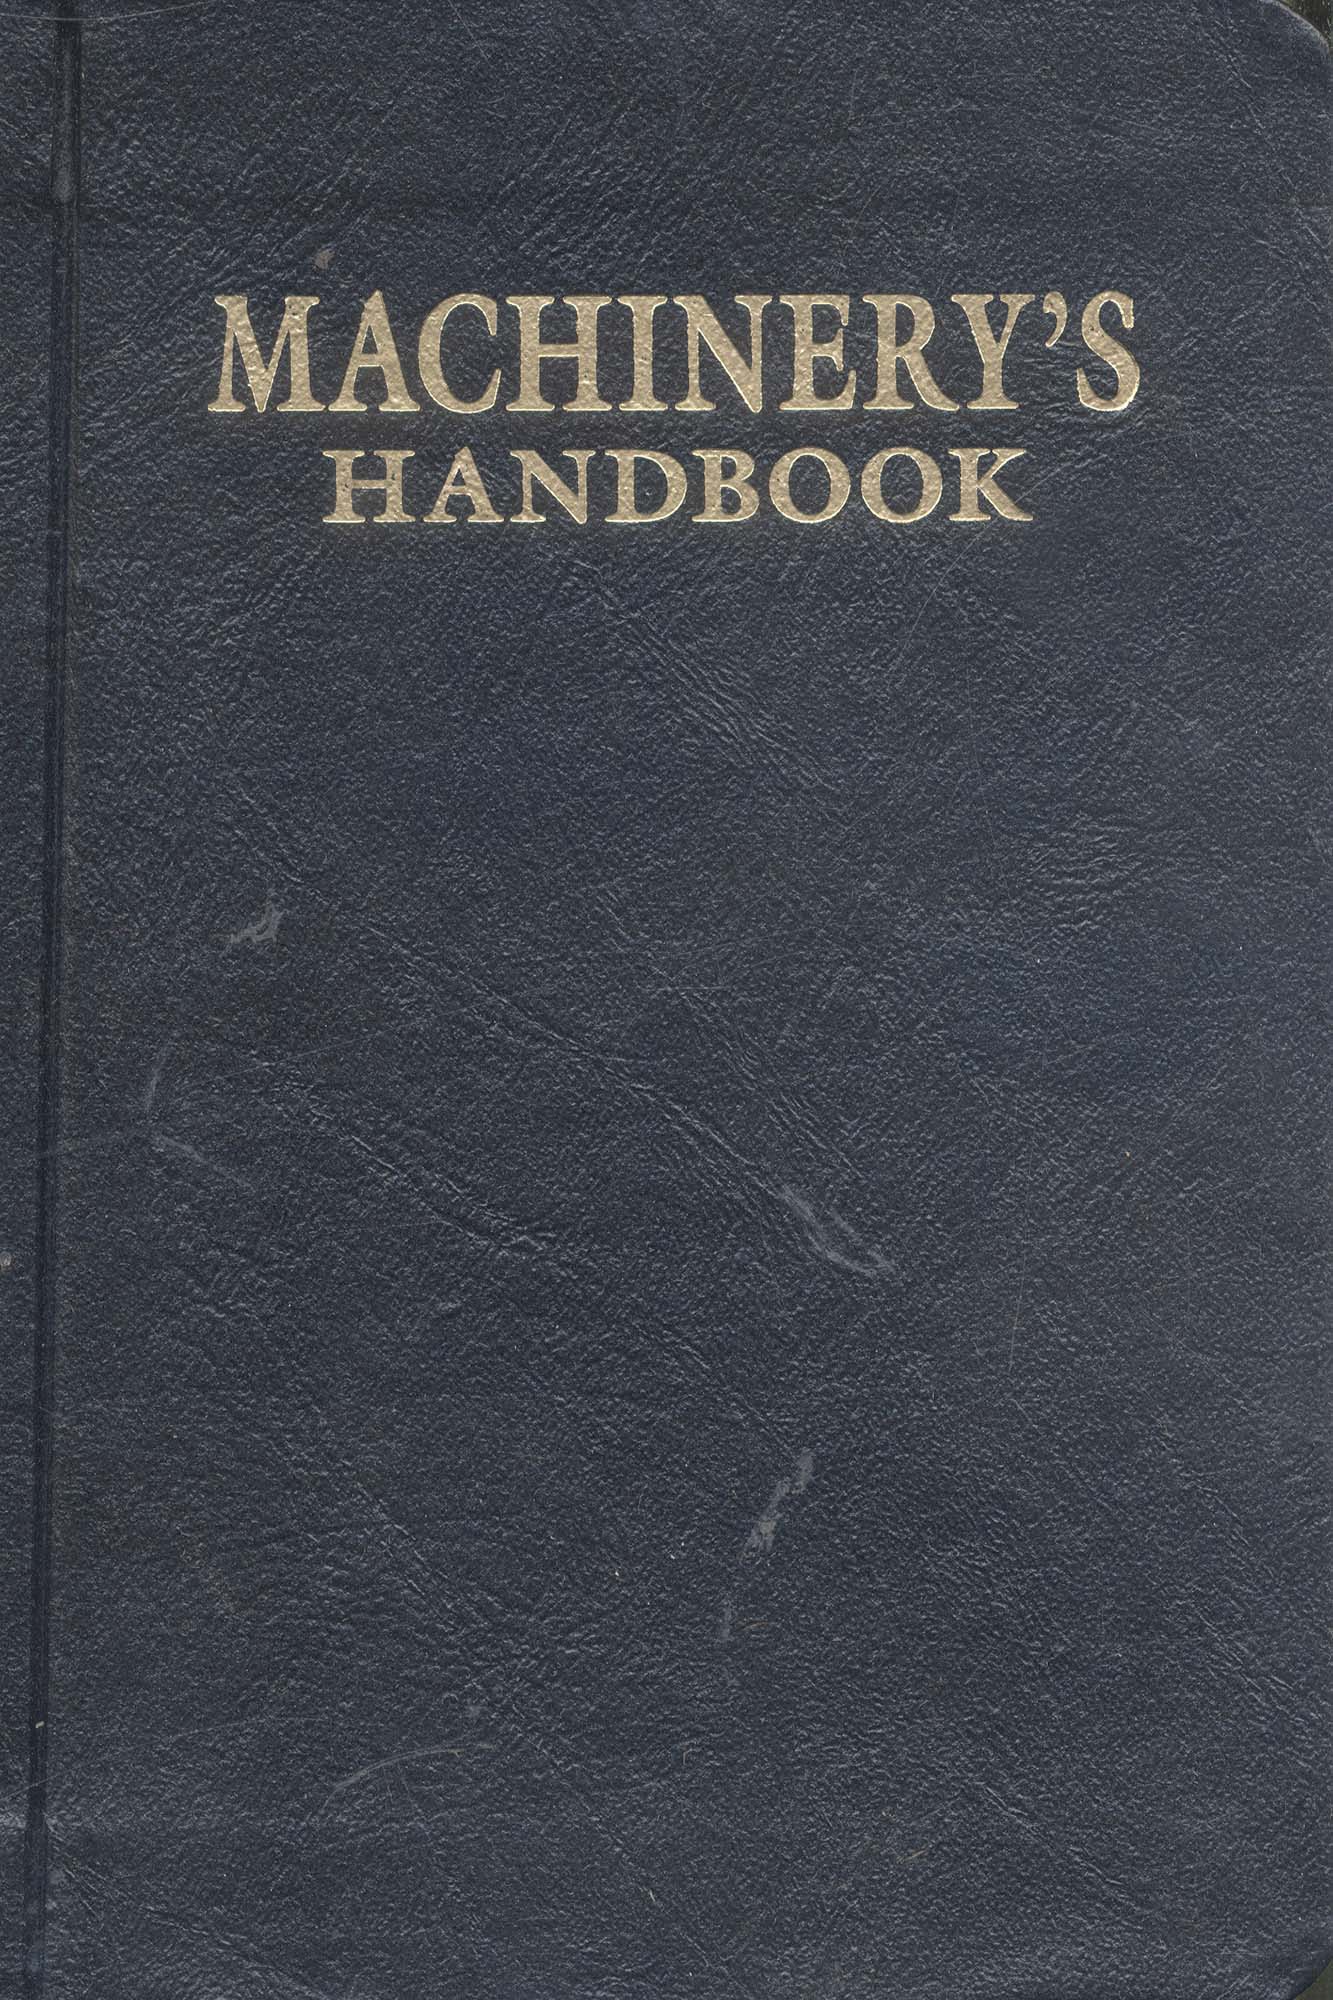 Book-Machinerys Handbook 1914 1st Edition Replica